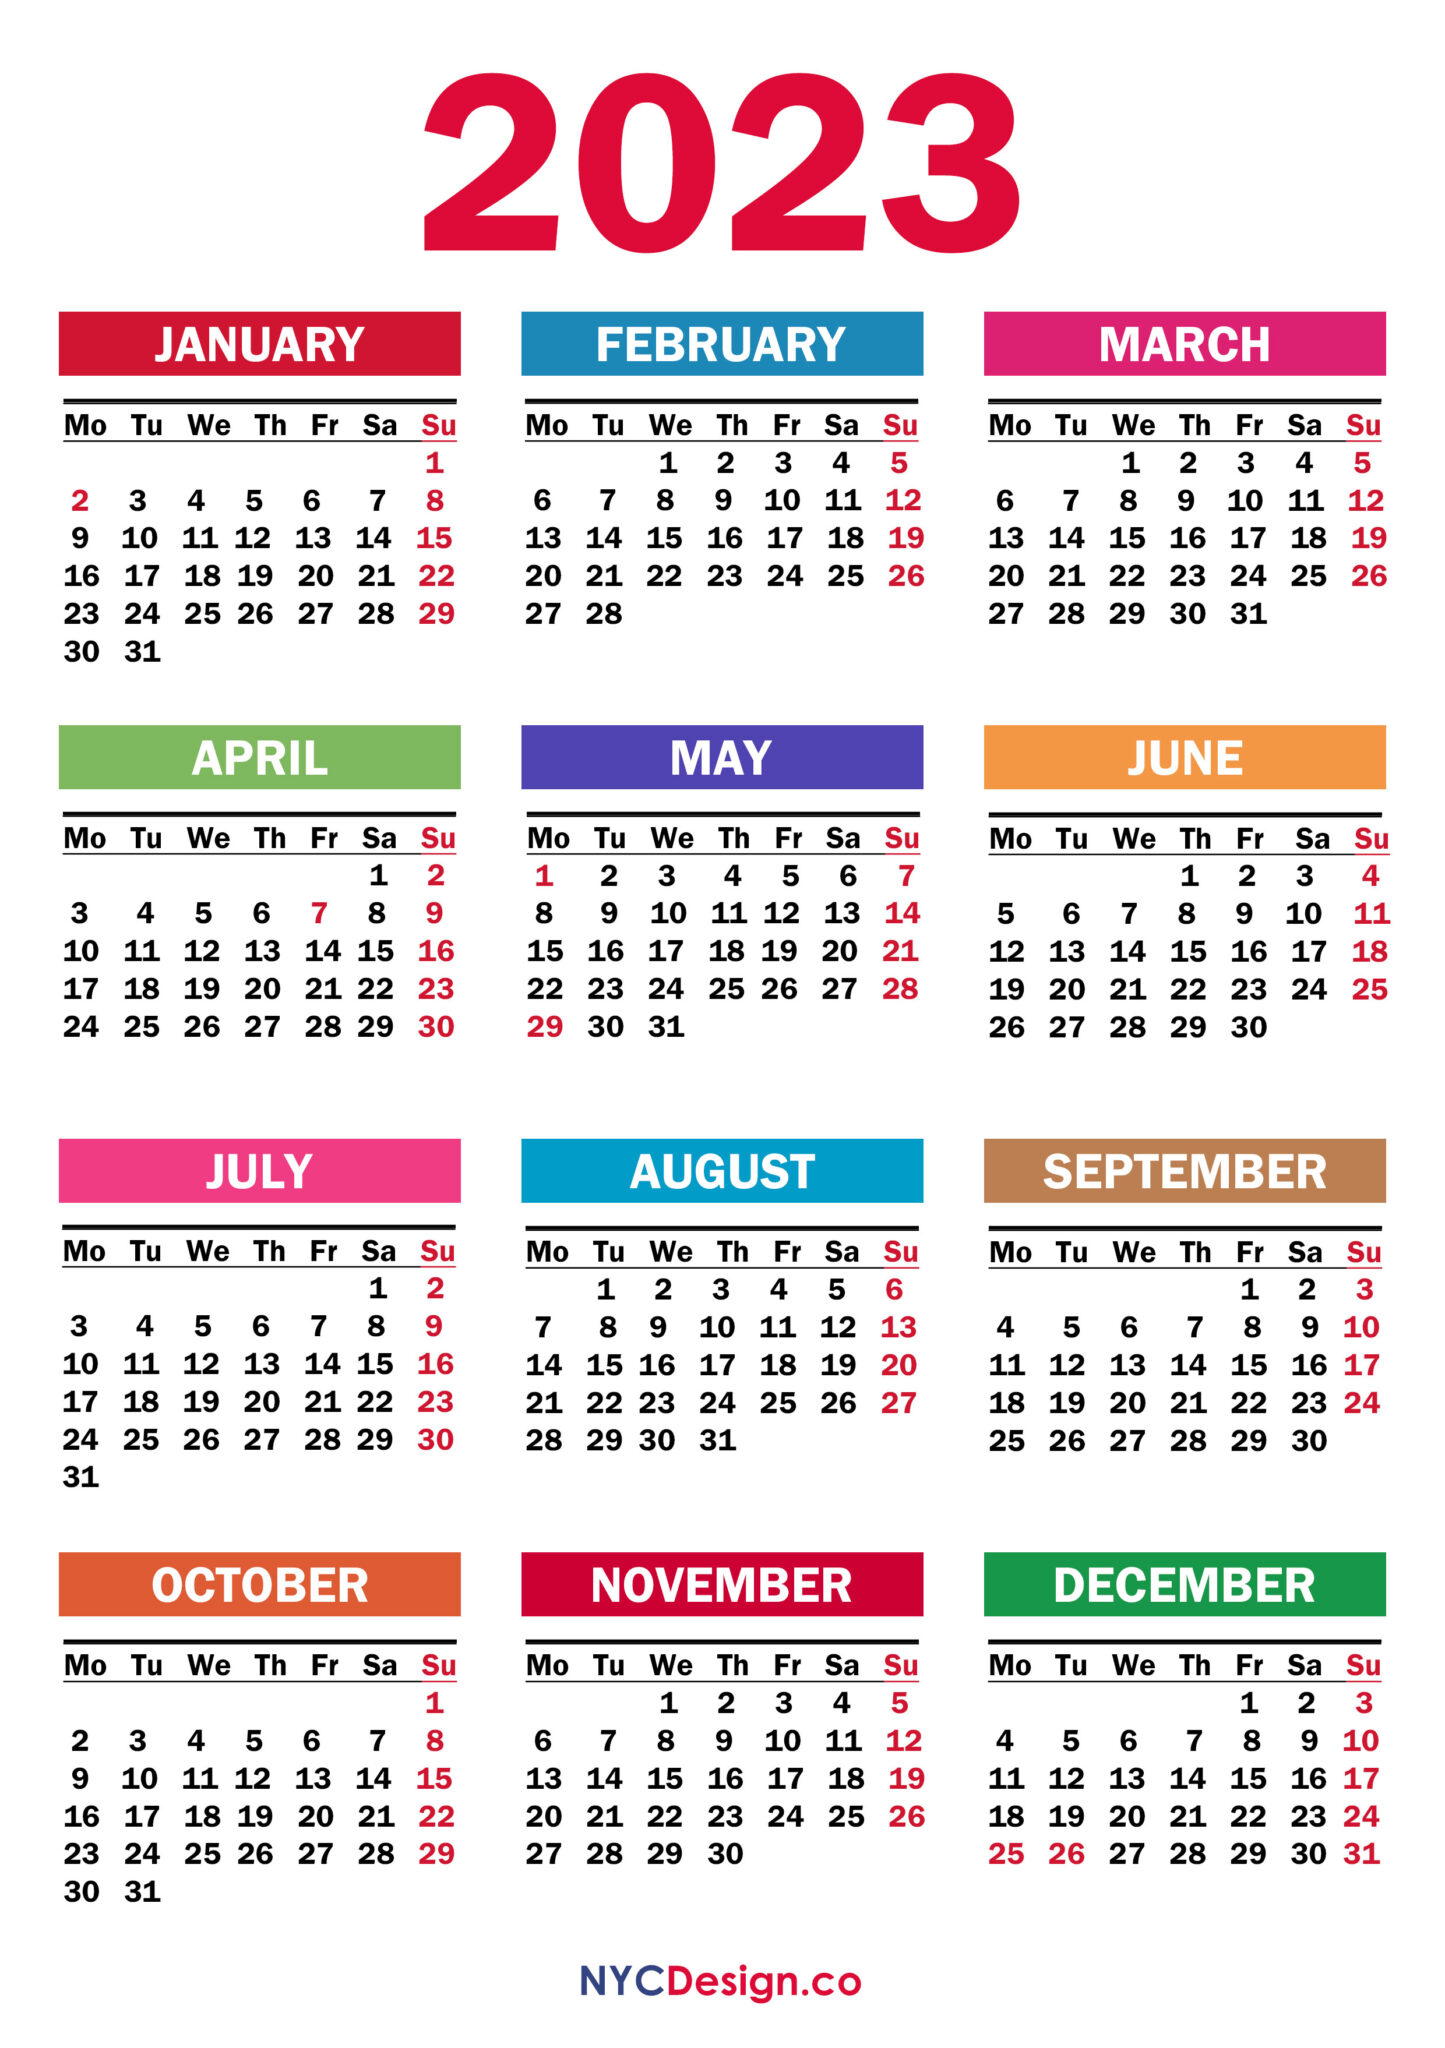 2023 Calendar Holidays UK CL White MS 001 1445x2048 